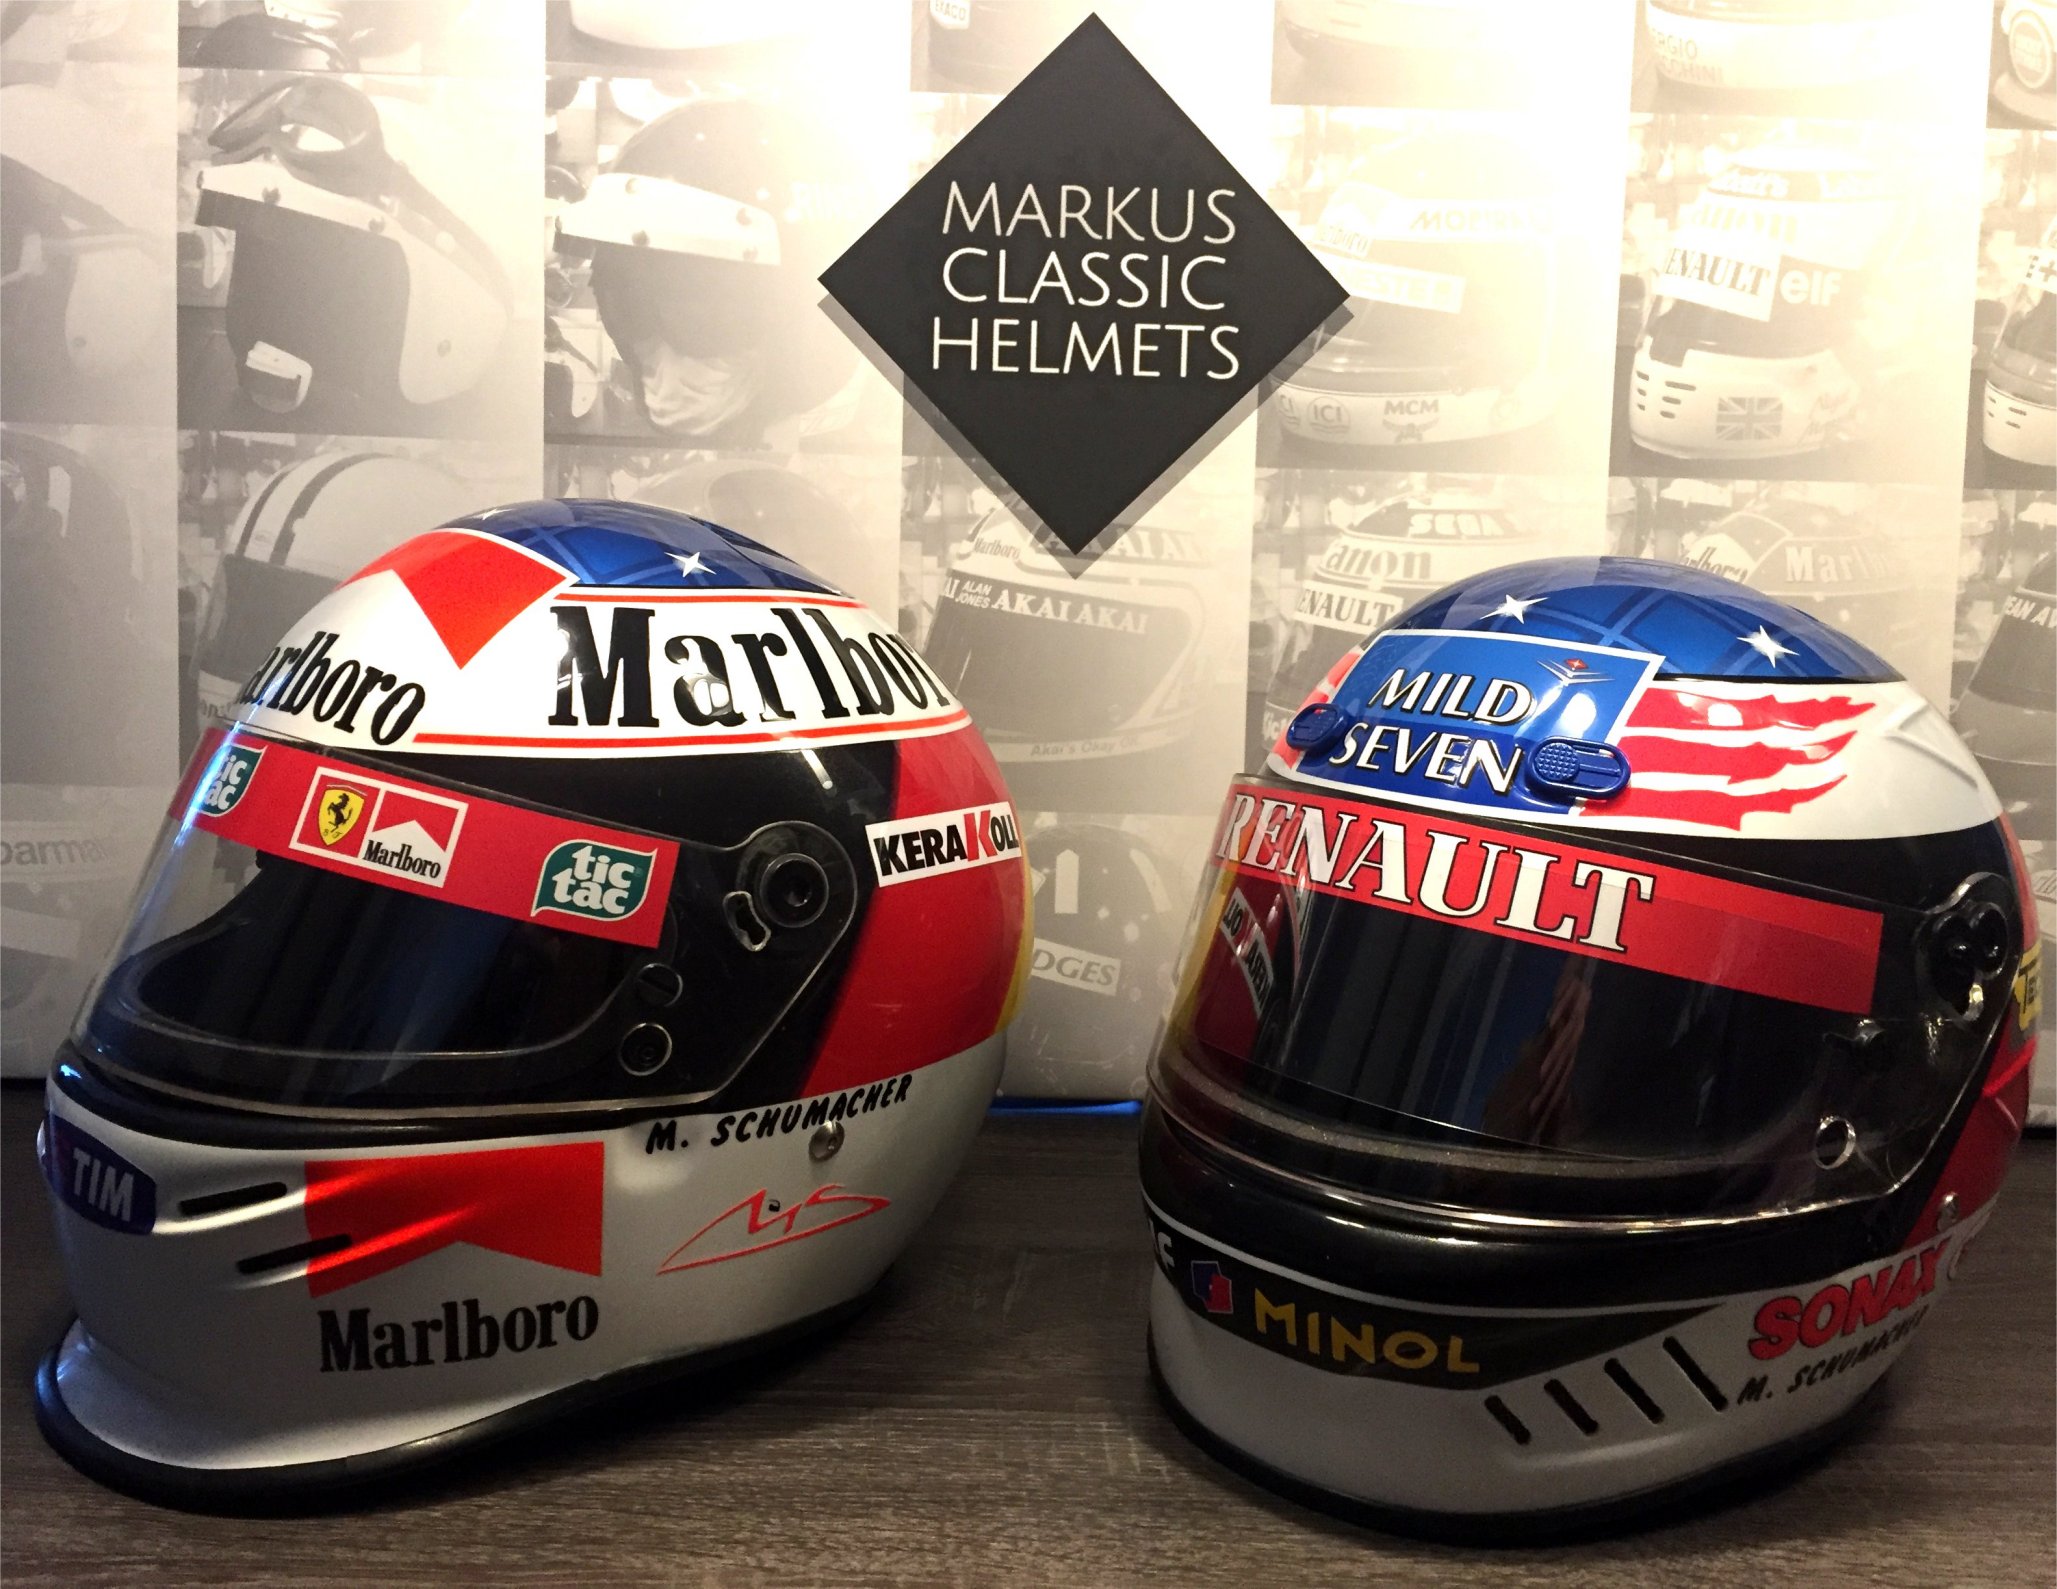 24 Michael Schumacher - Markus Classic Helmets2057 x 1589